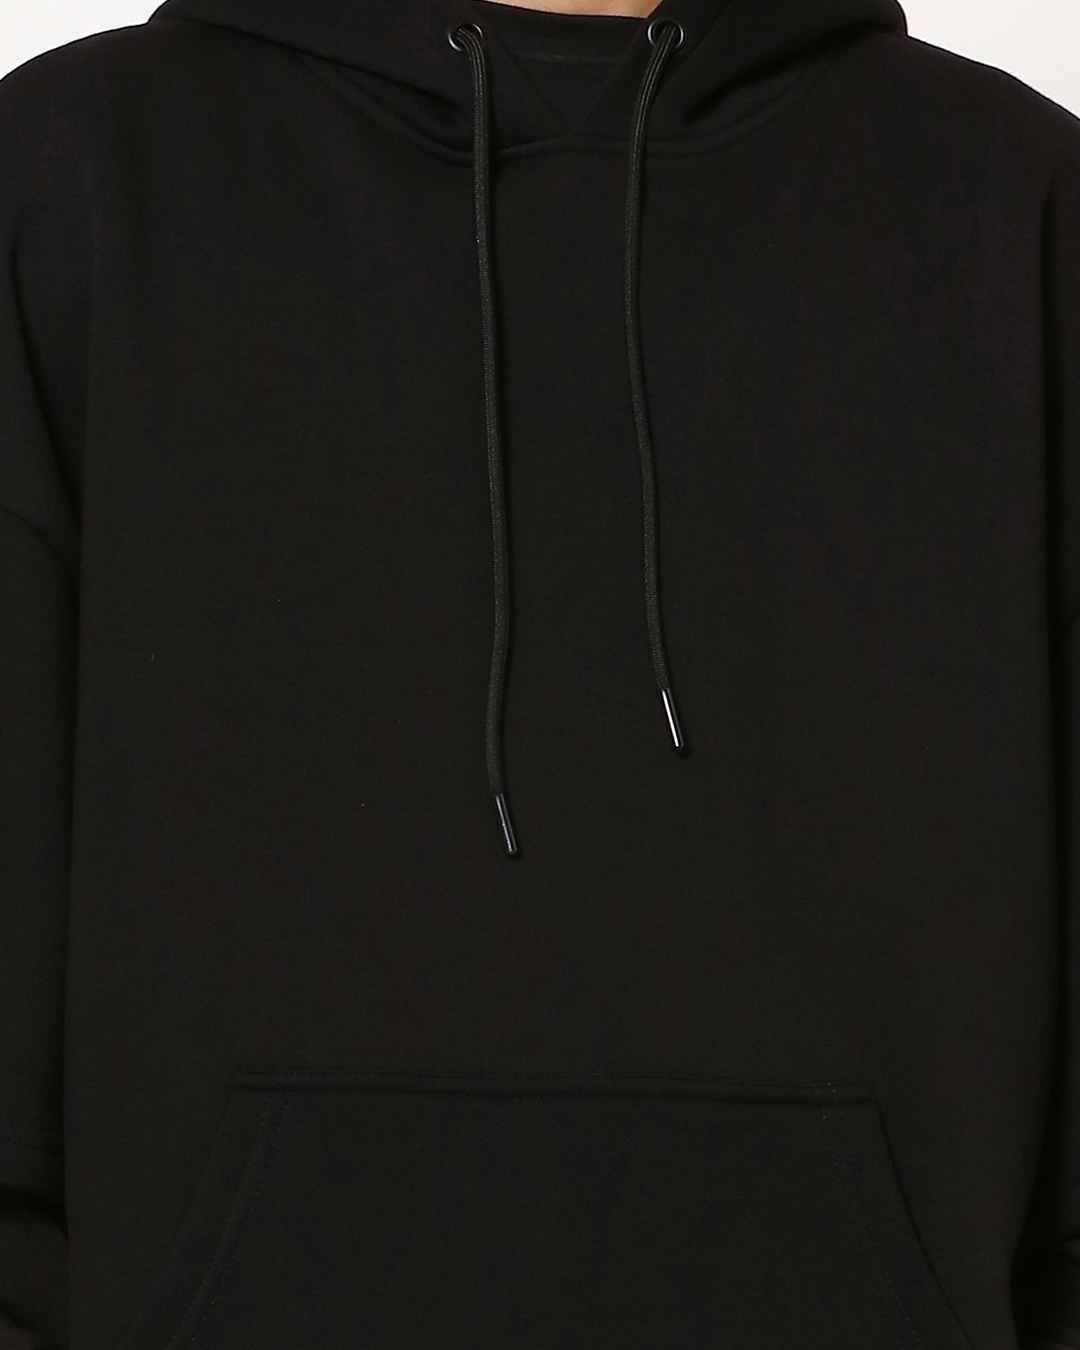 Shop Men's Black Layer Sleeve Hoodies